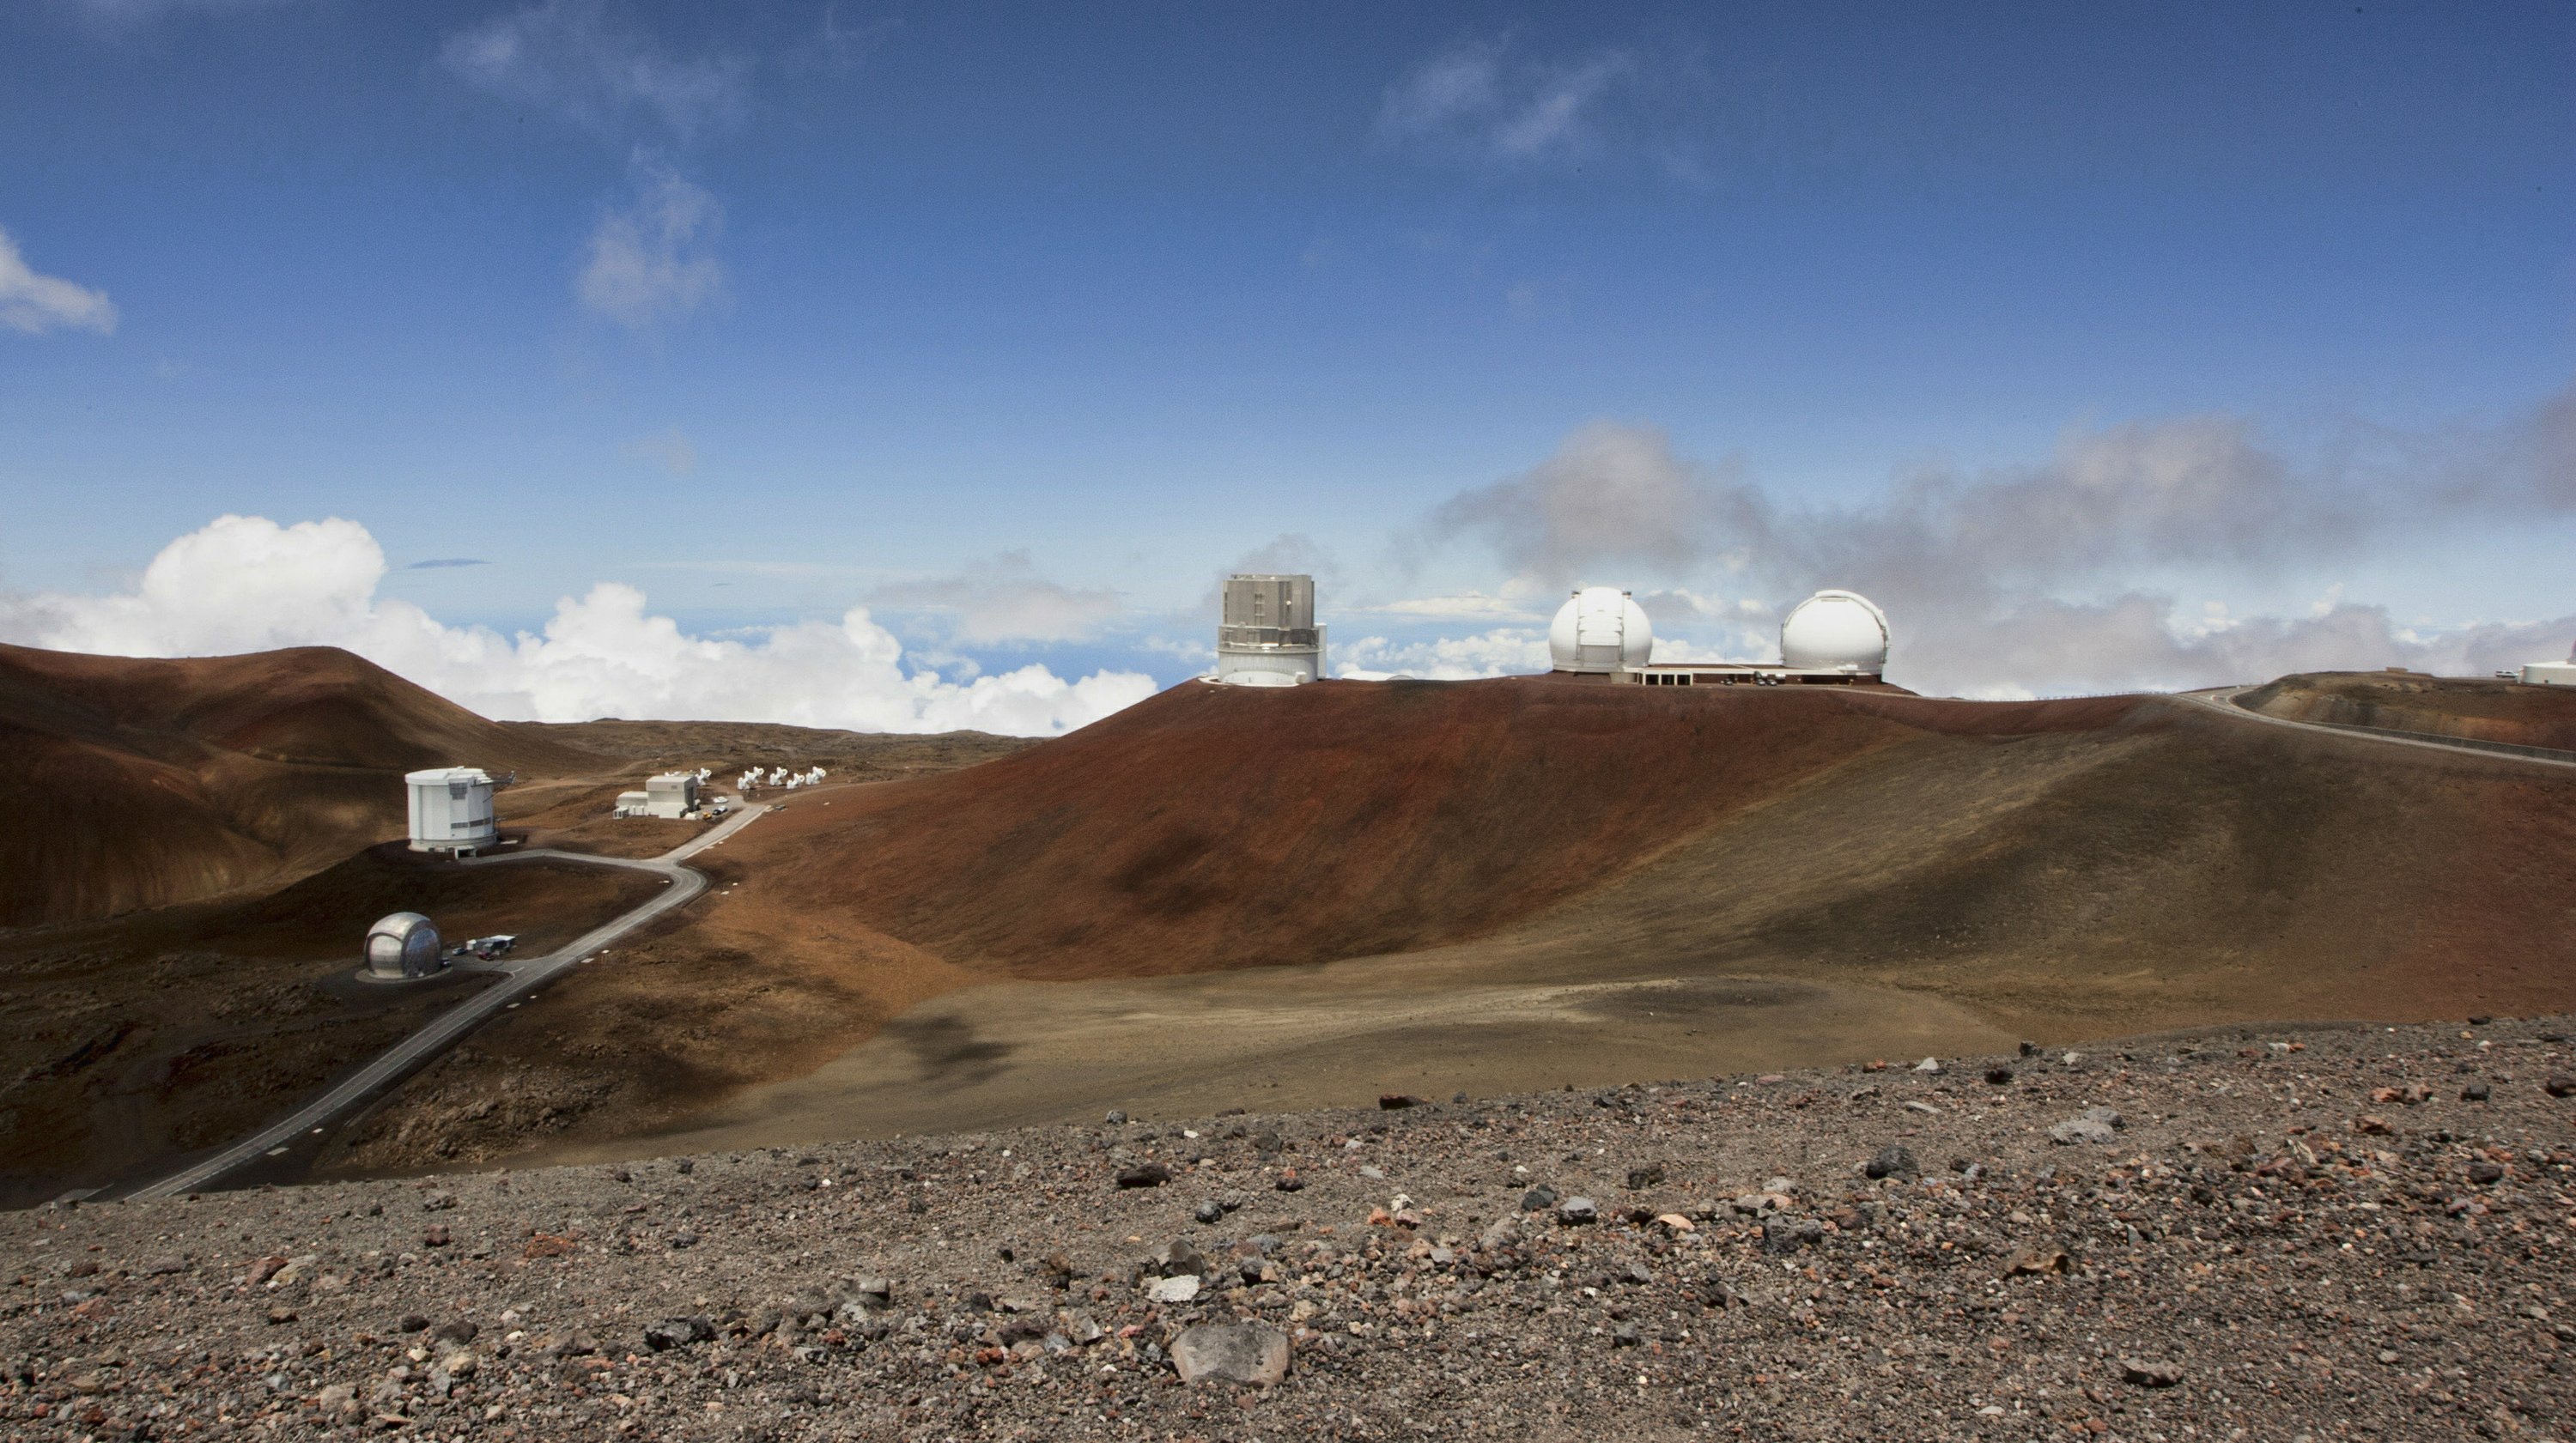 hawaii telescope project